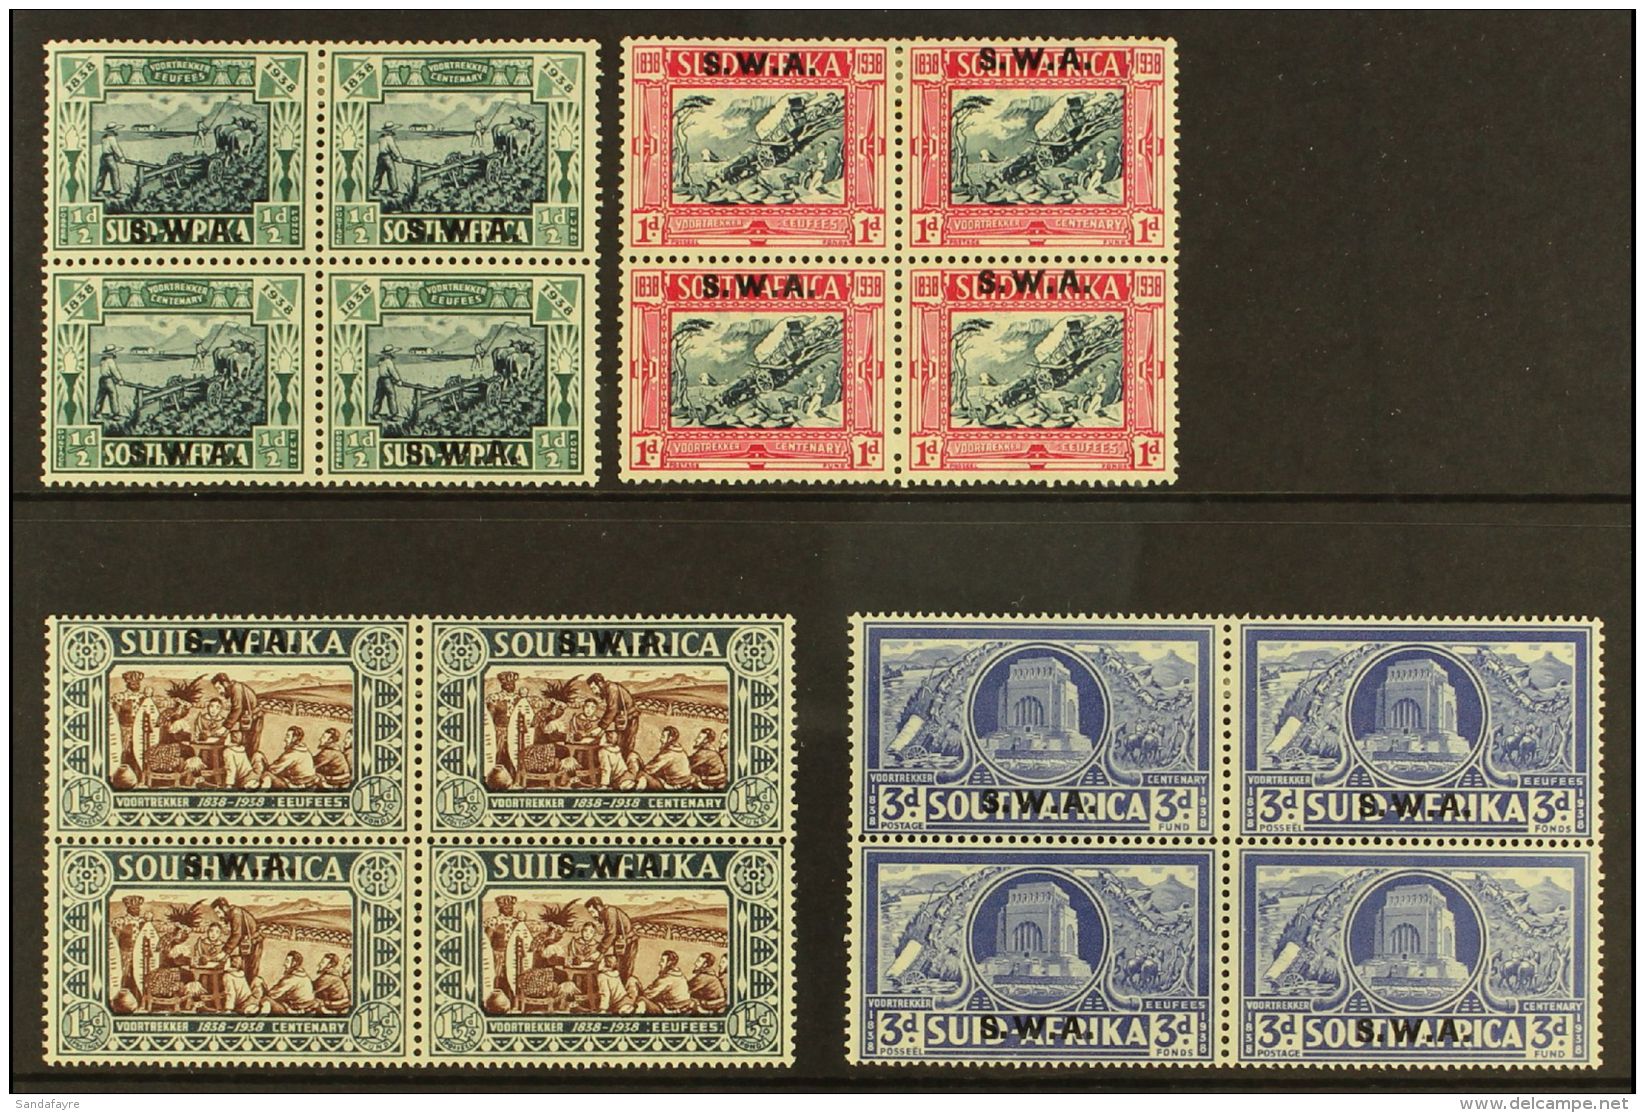 1938  Voortrekker Centenary Memorial Set, SG 105/108 In Fine Mint/NHM Blocks Of 4, The Lower Stamps In Each Block... - Zuidwest-Afrika (1923-1990)